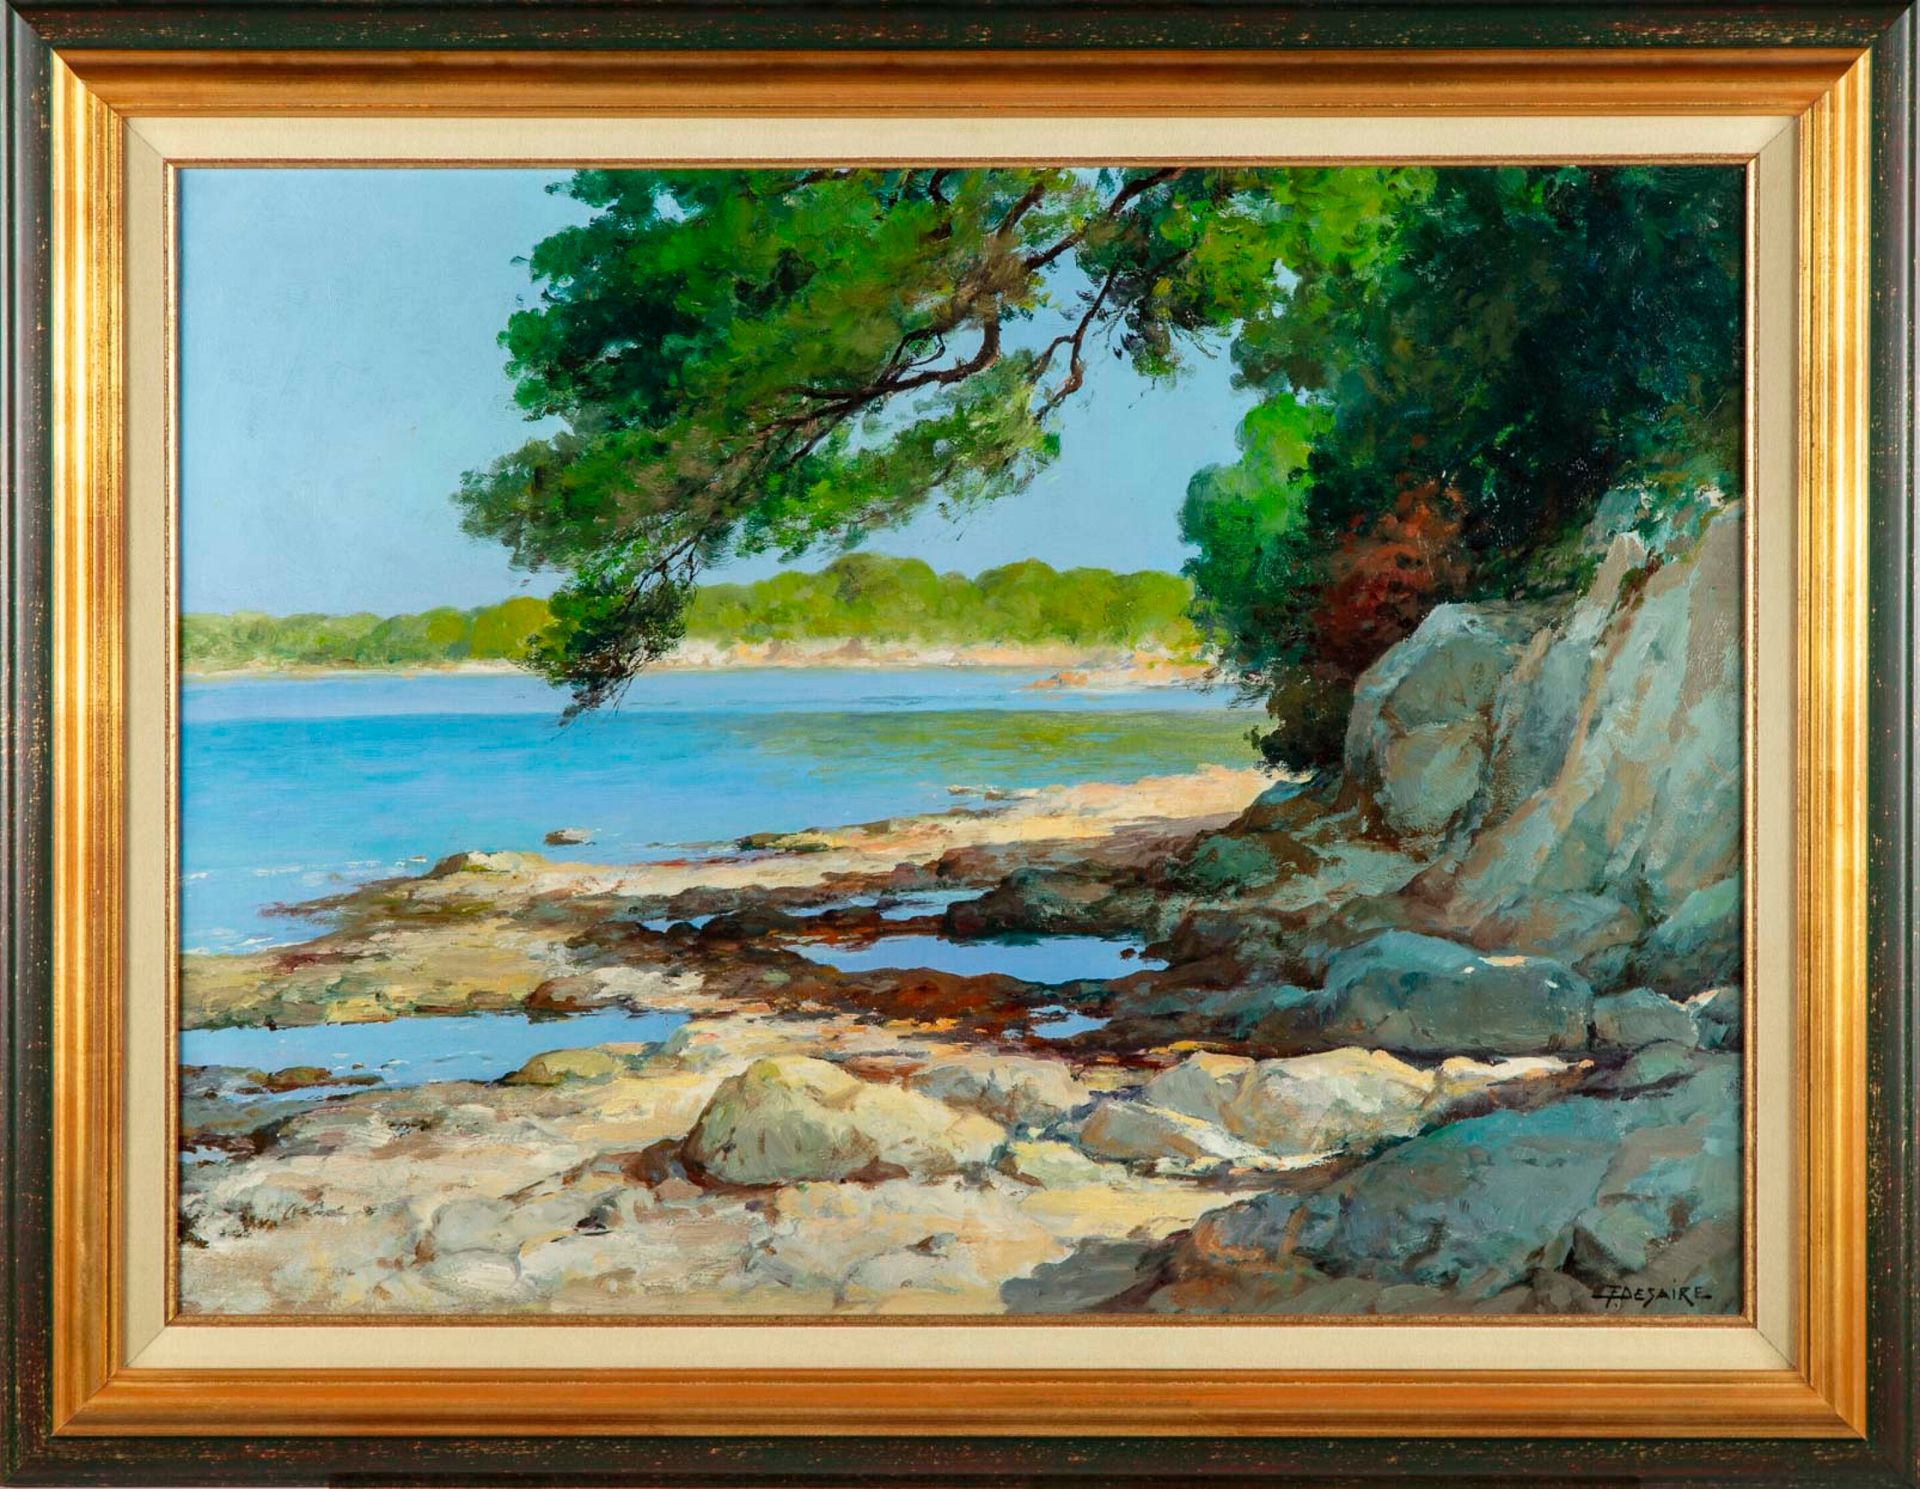 DESAIRE 费尔南-戴赛尔 (1885-1958)

海滨 - 安提布角

布面油画，左下角有签名

54 x 73 cm